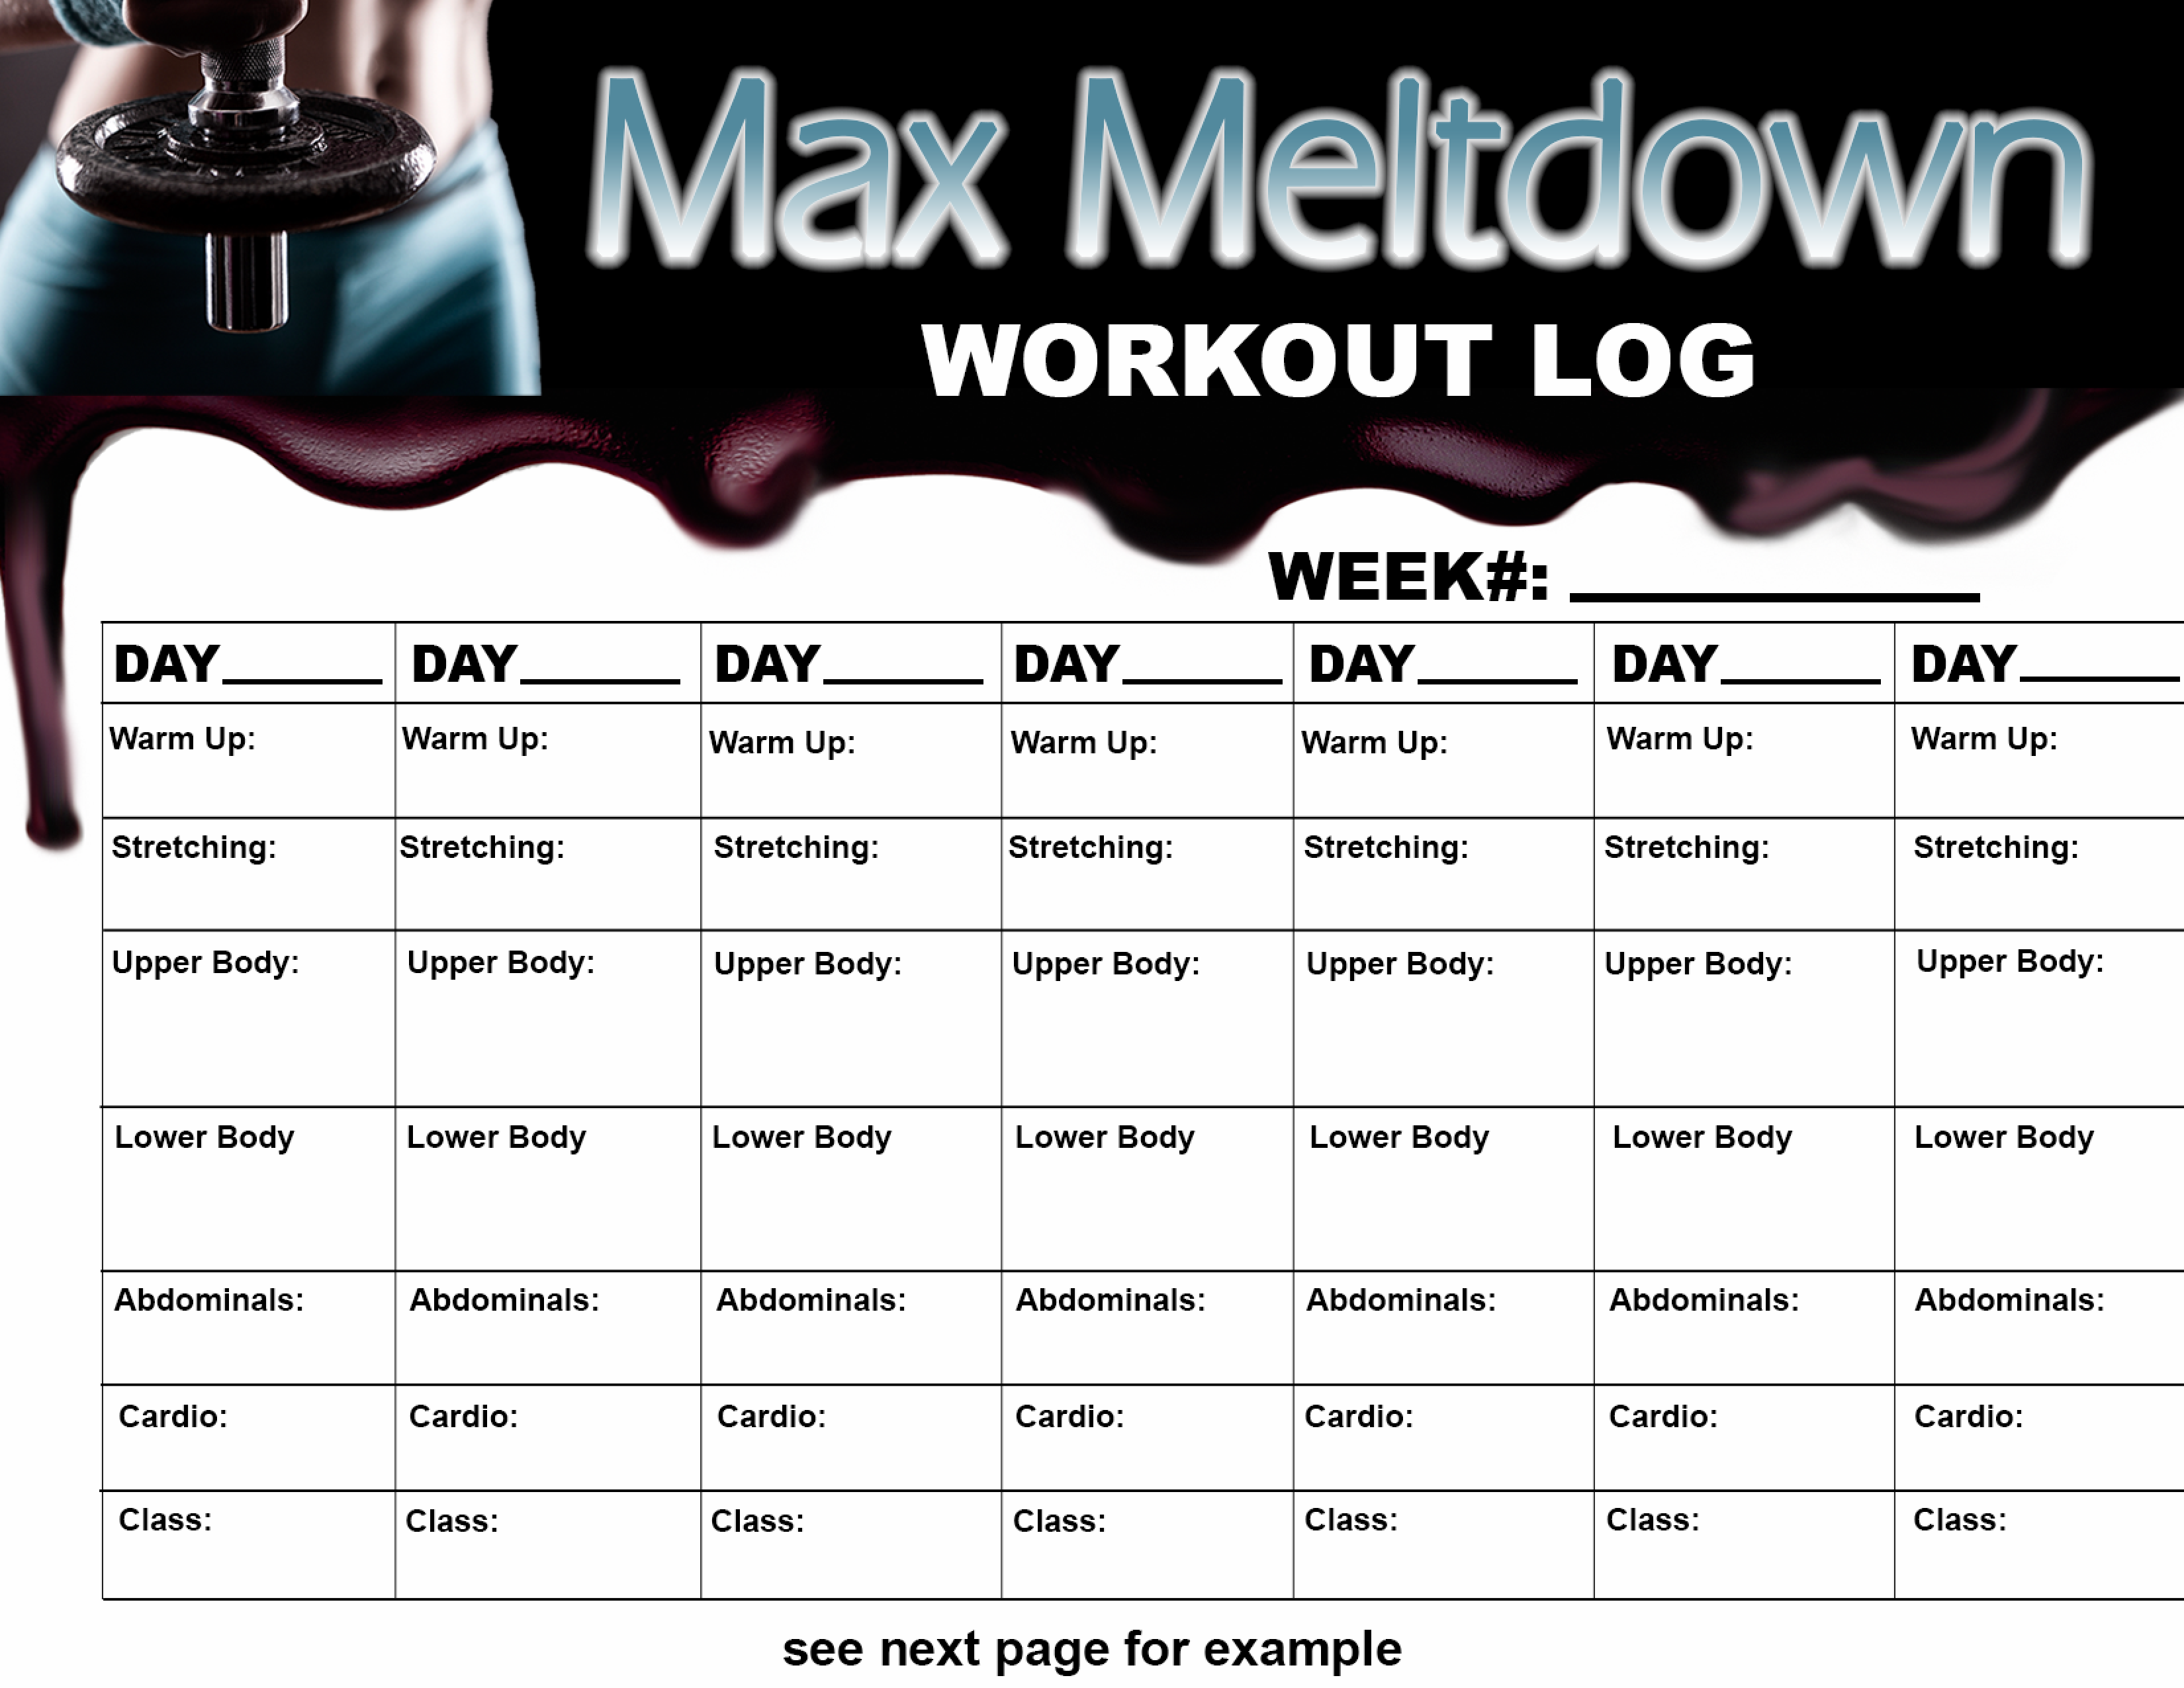 Daily Workout Log main image